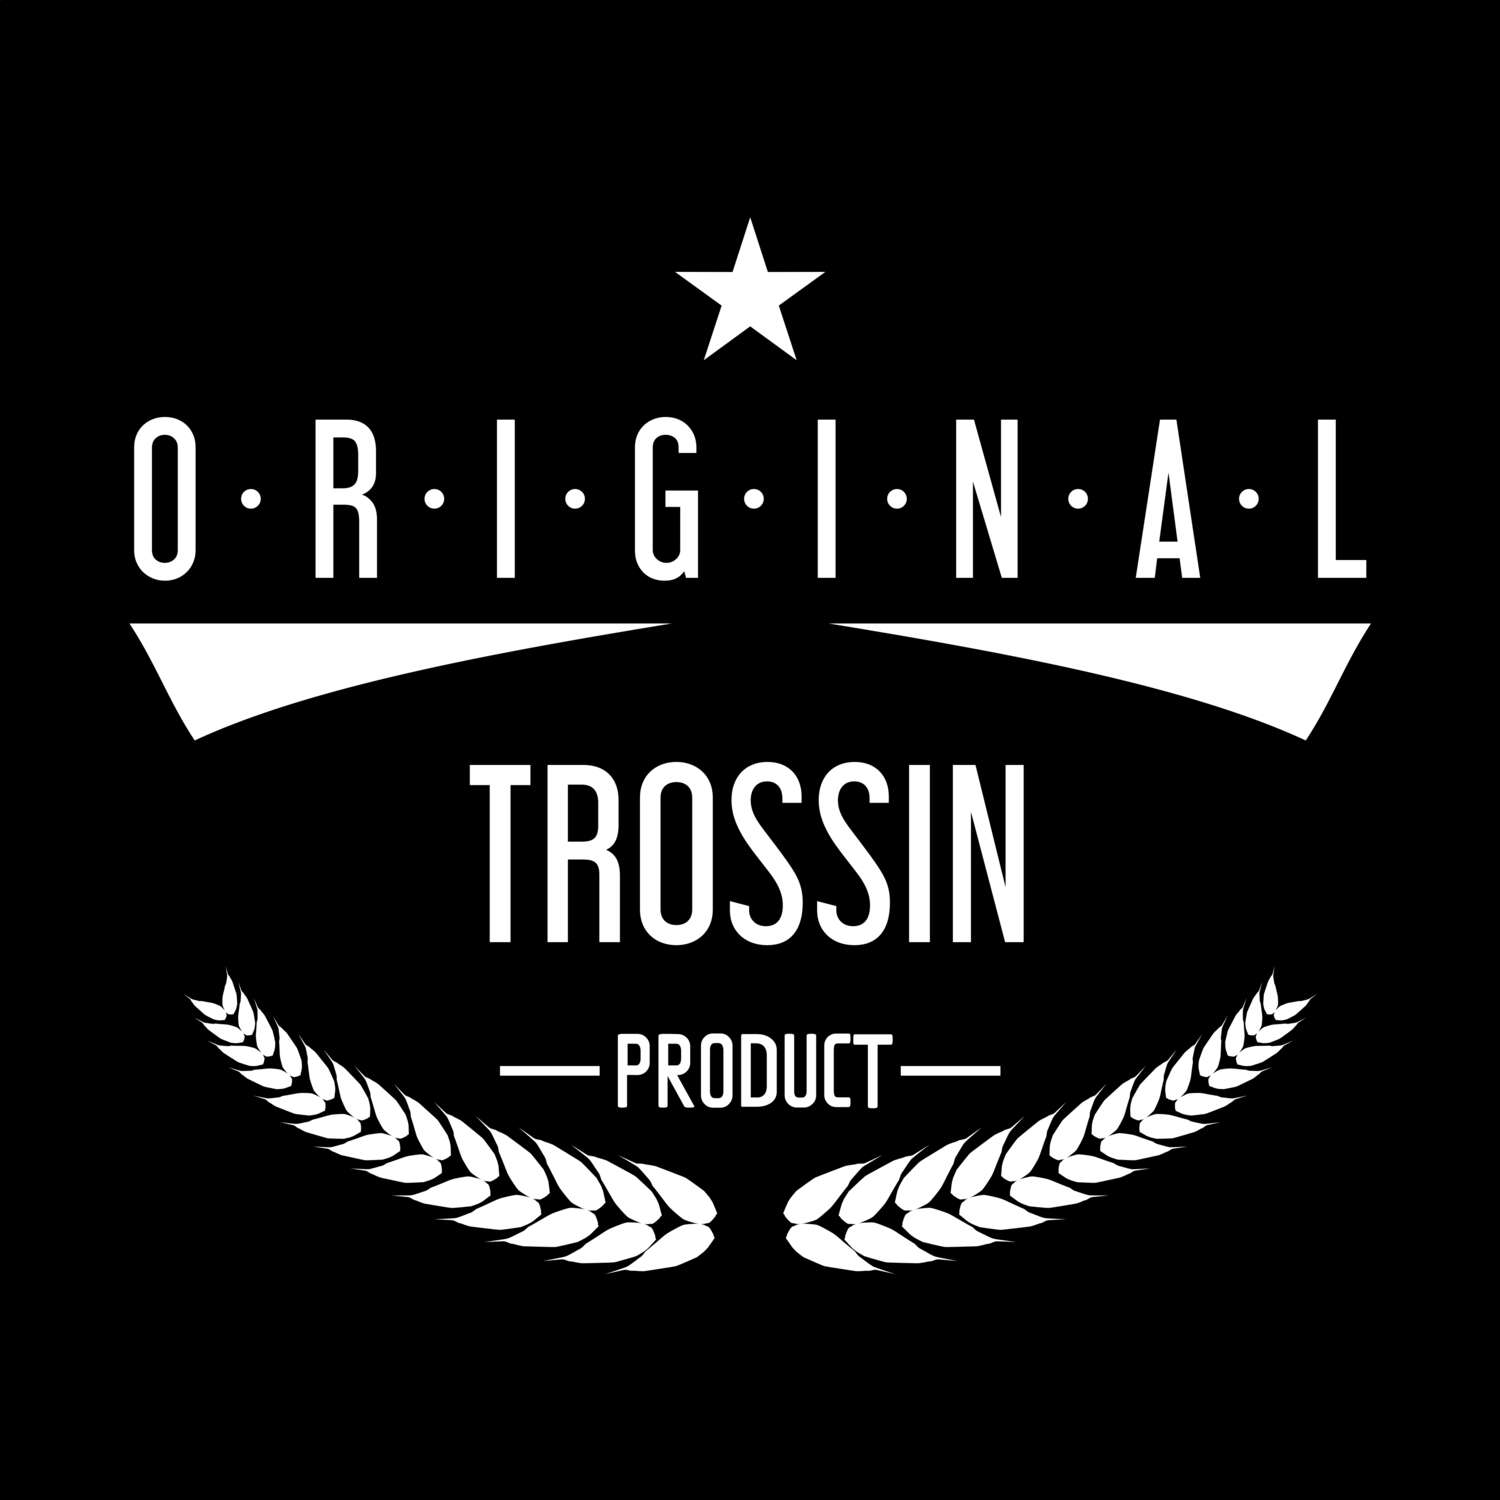 Trossin T-Shirt »Original Product«